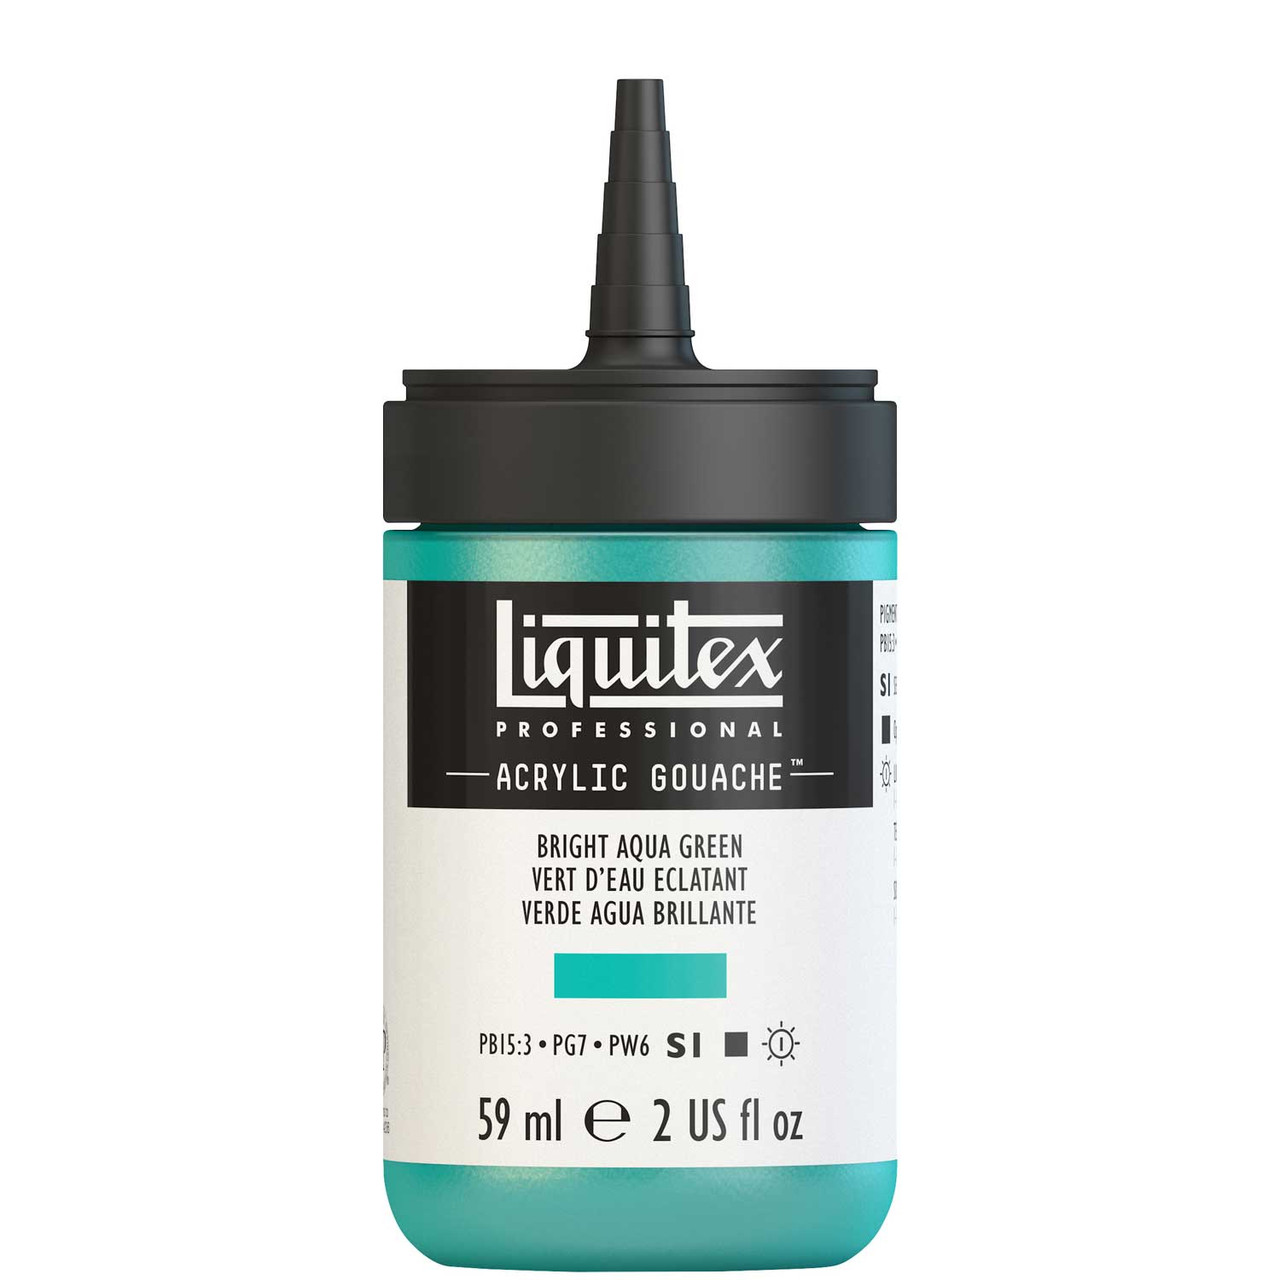 Liquitex Acrylic Gouache 2oz Bottle Bright Aqua Green - Wet Paint